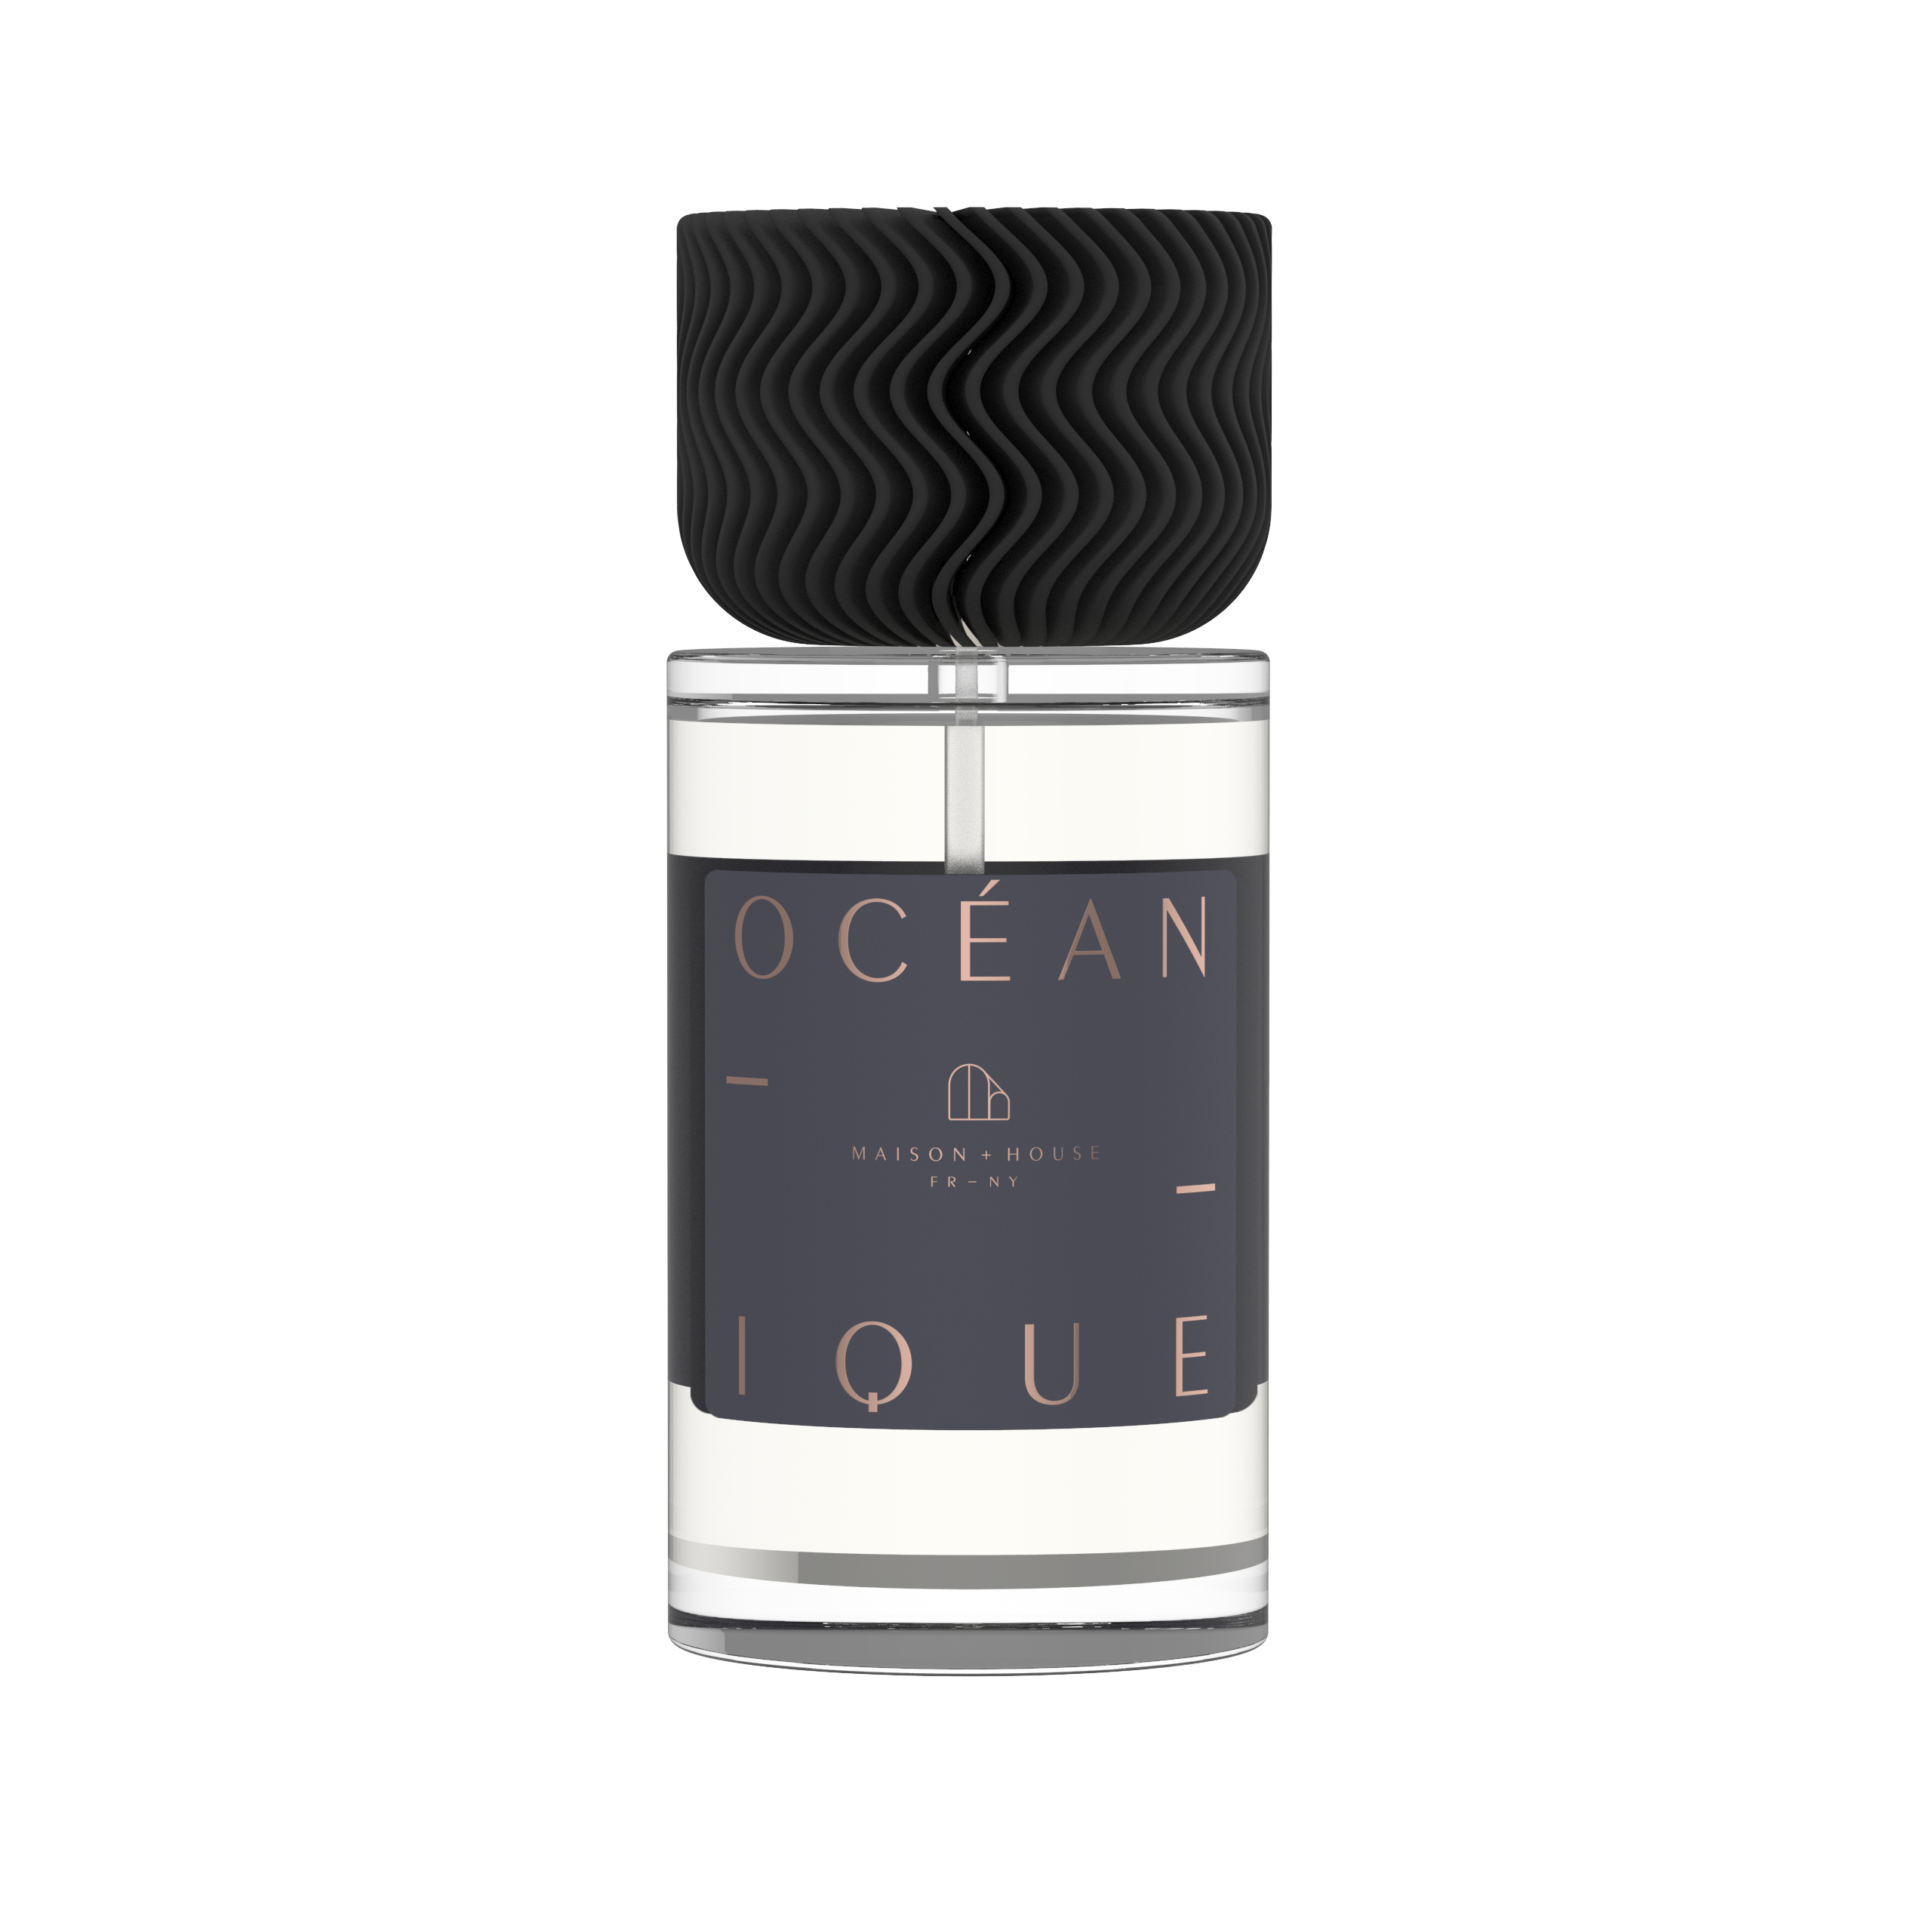 Oceanique – Sea Mist Nº4181 French-Fragrance Room / Linen / Body Spray